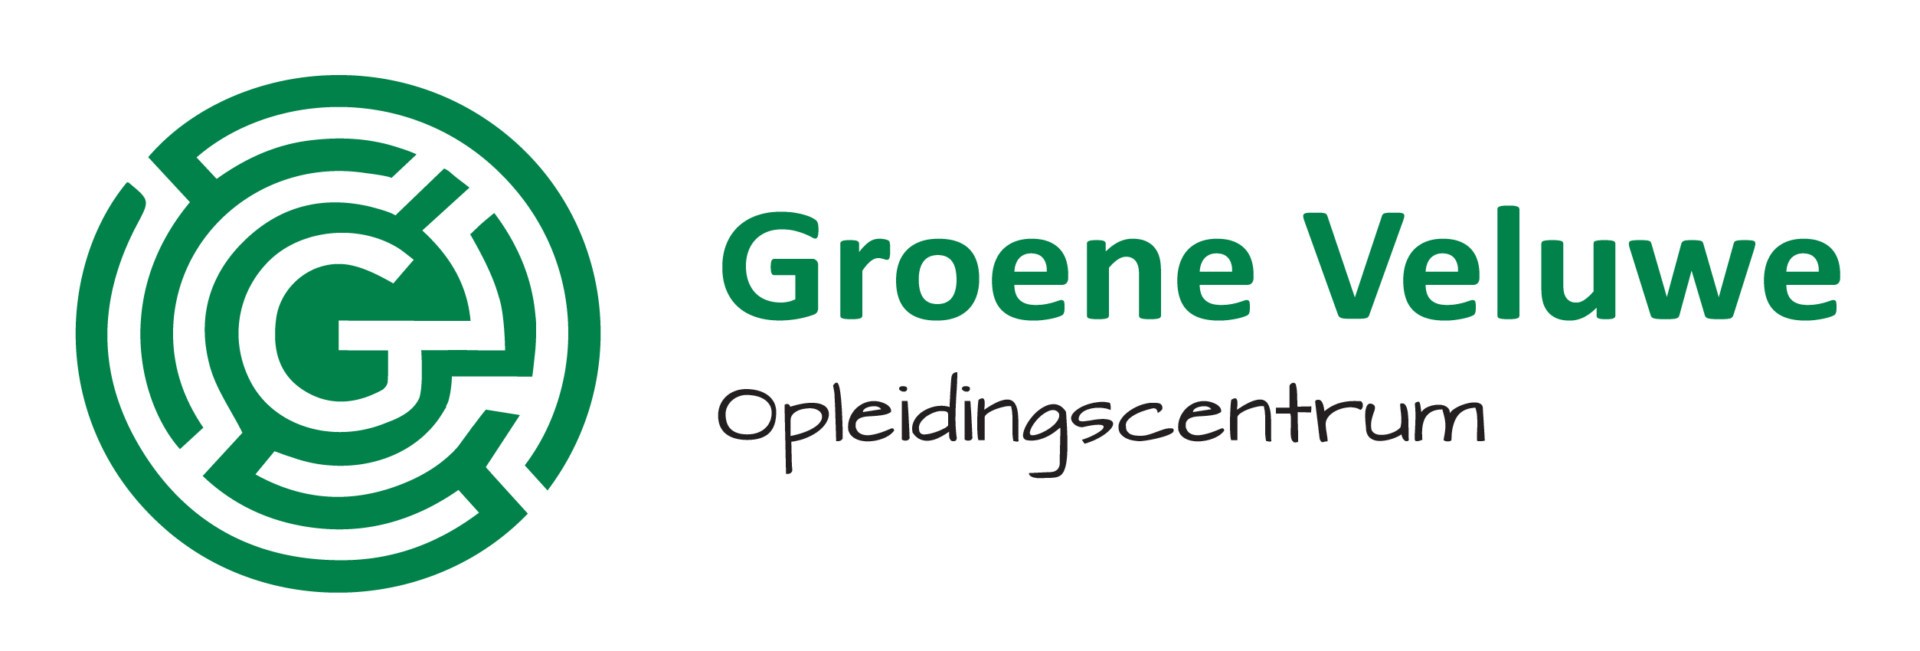 Groene-Veluwe-01-01